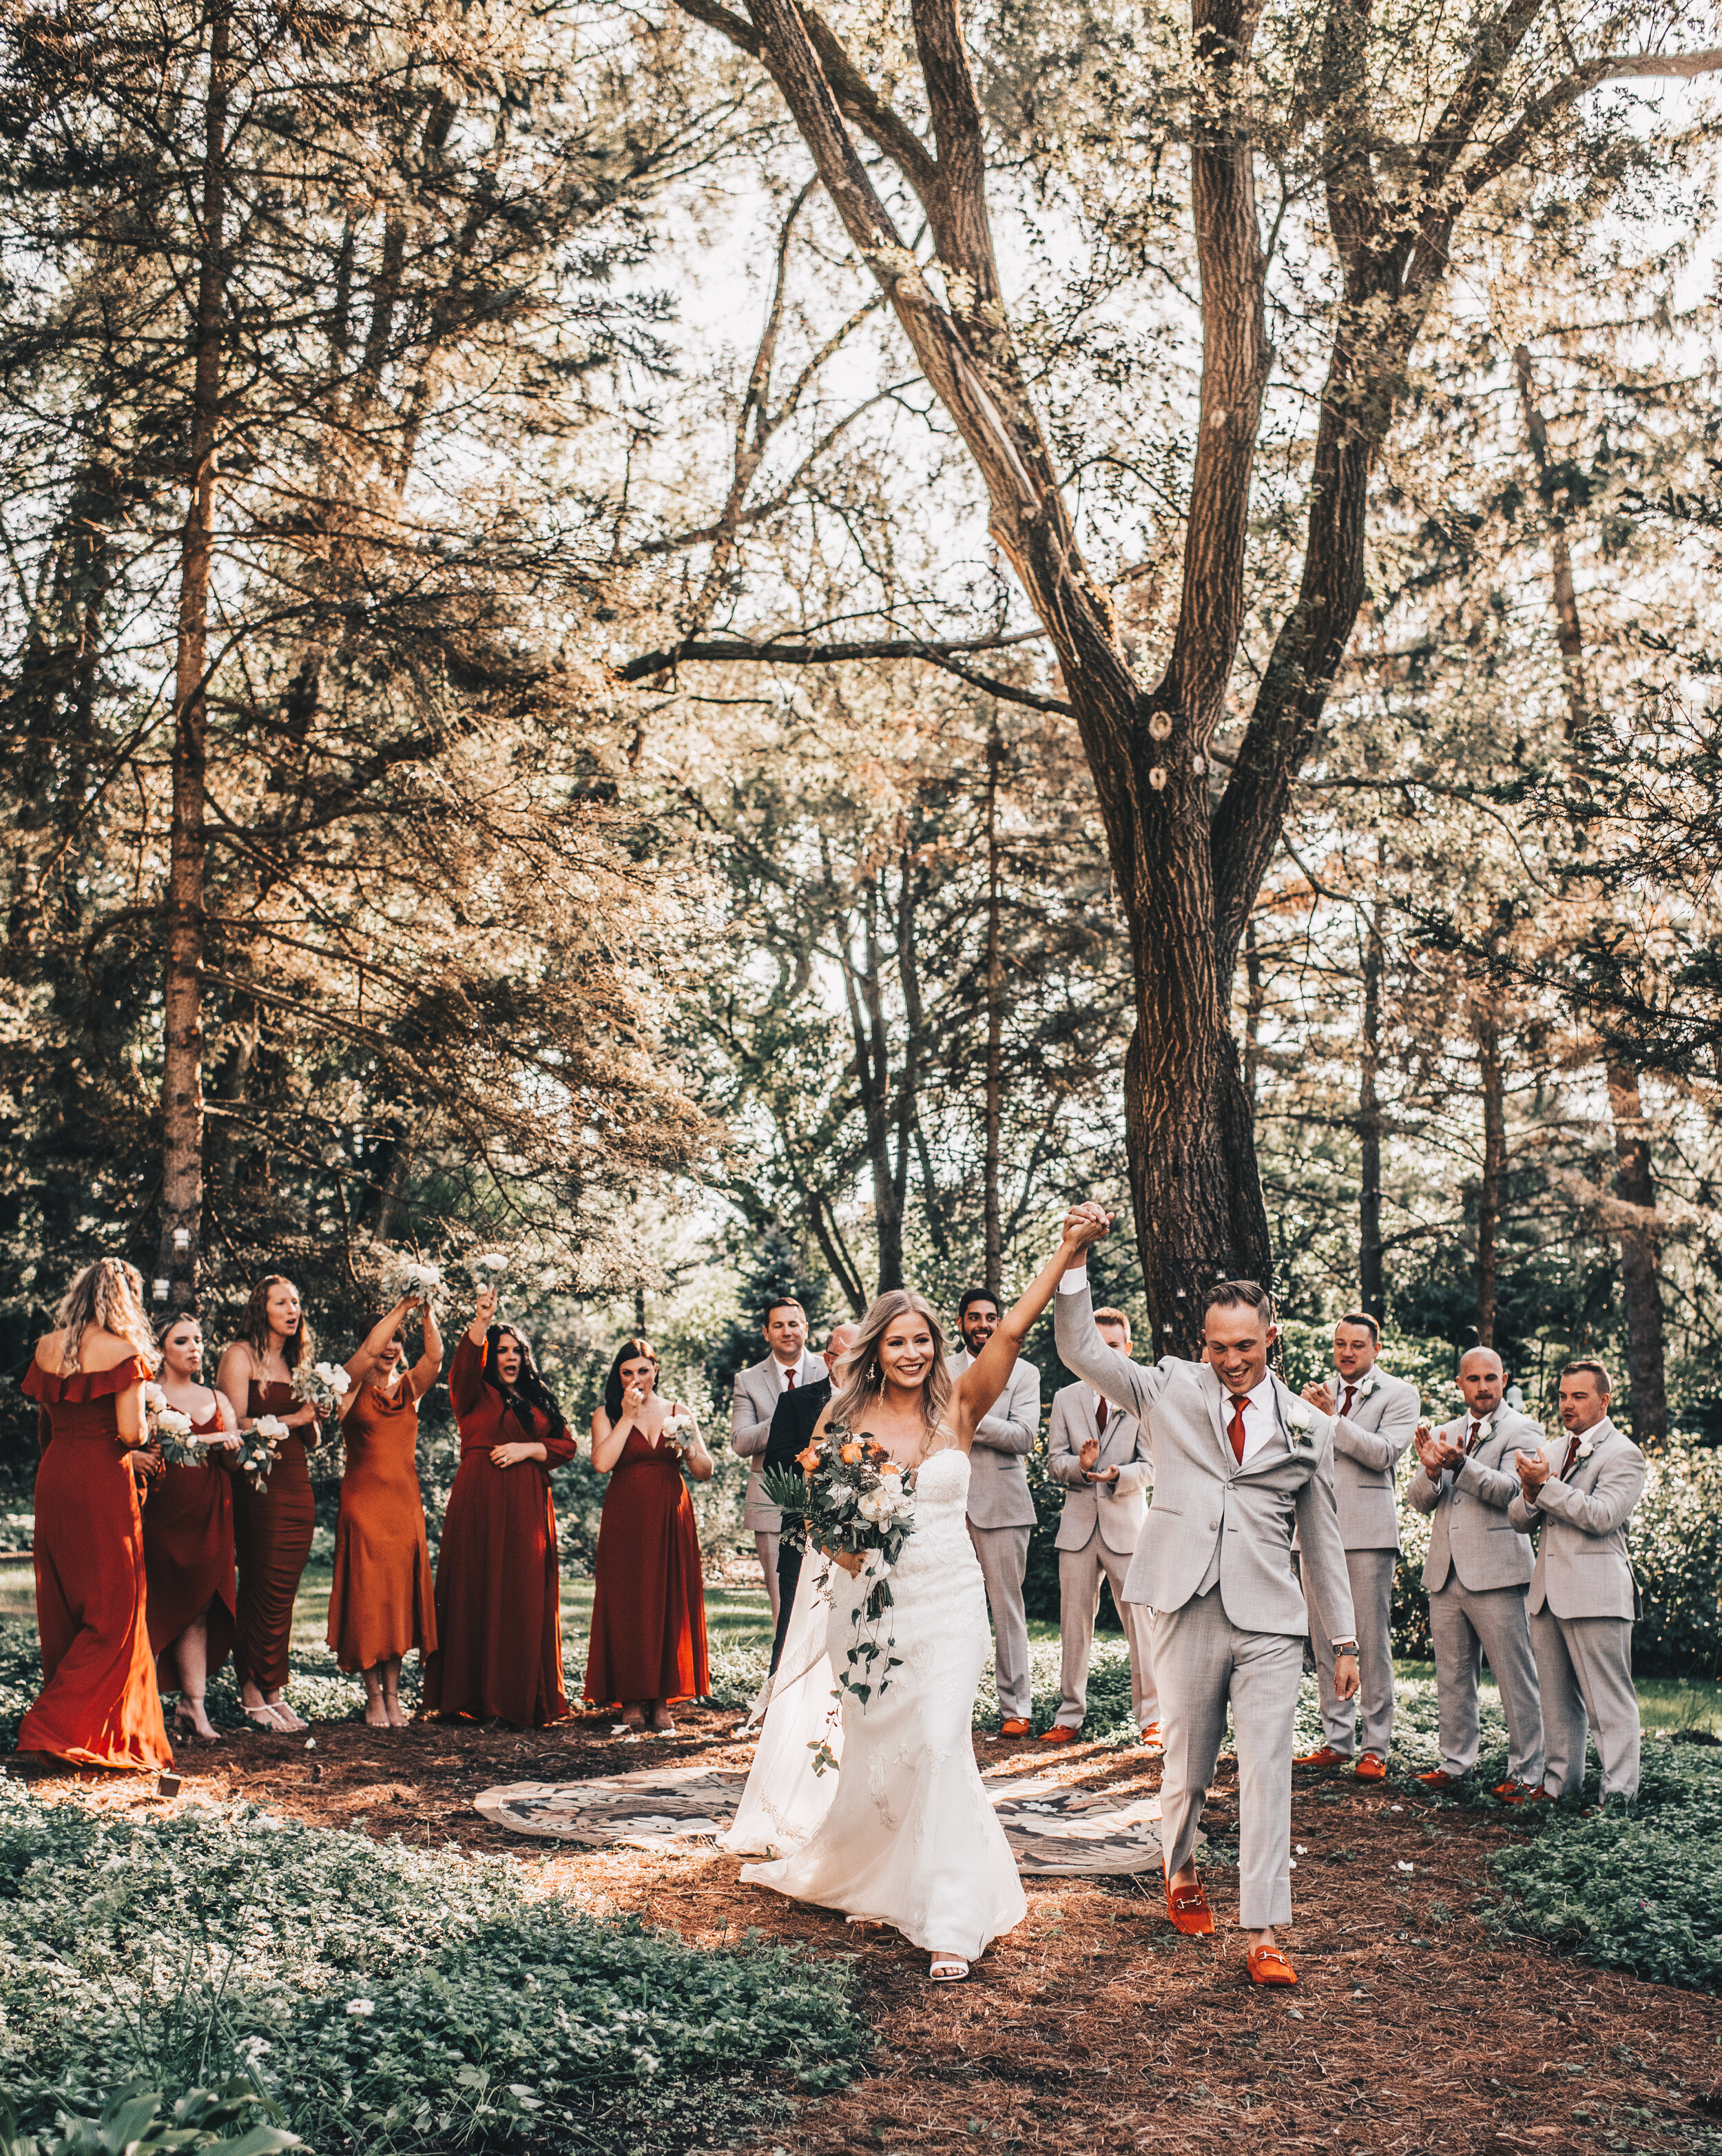 Midwest Backyard Wedding, Intimate Wedding, Outdoor Wedding, Illinois Backyard Wedding, Illinois Intimate Wedding Ceremony